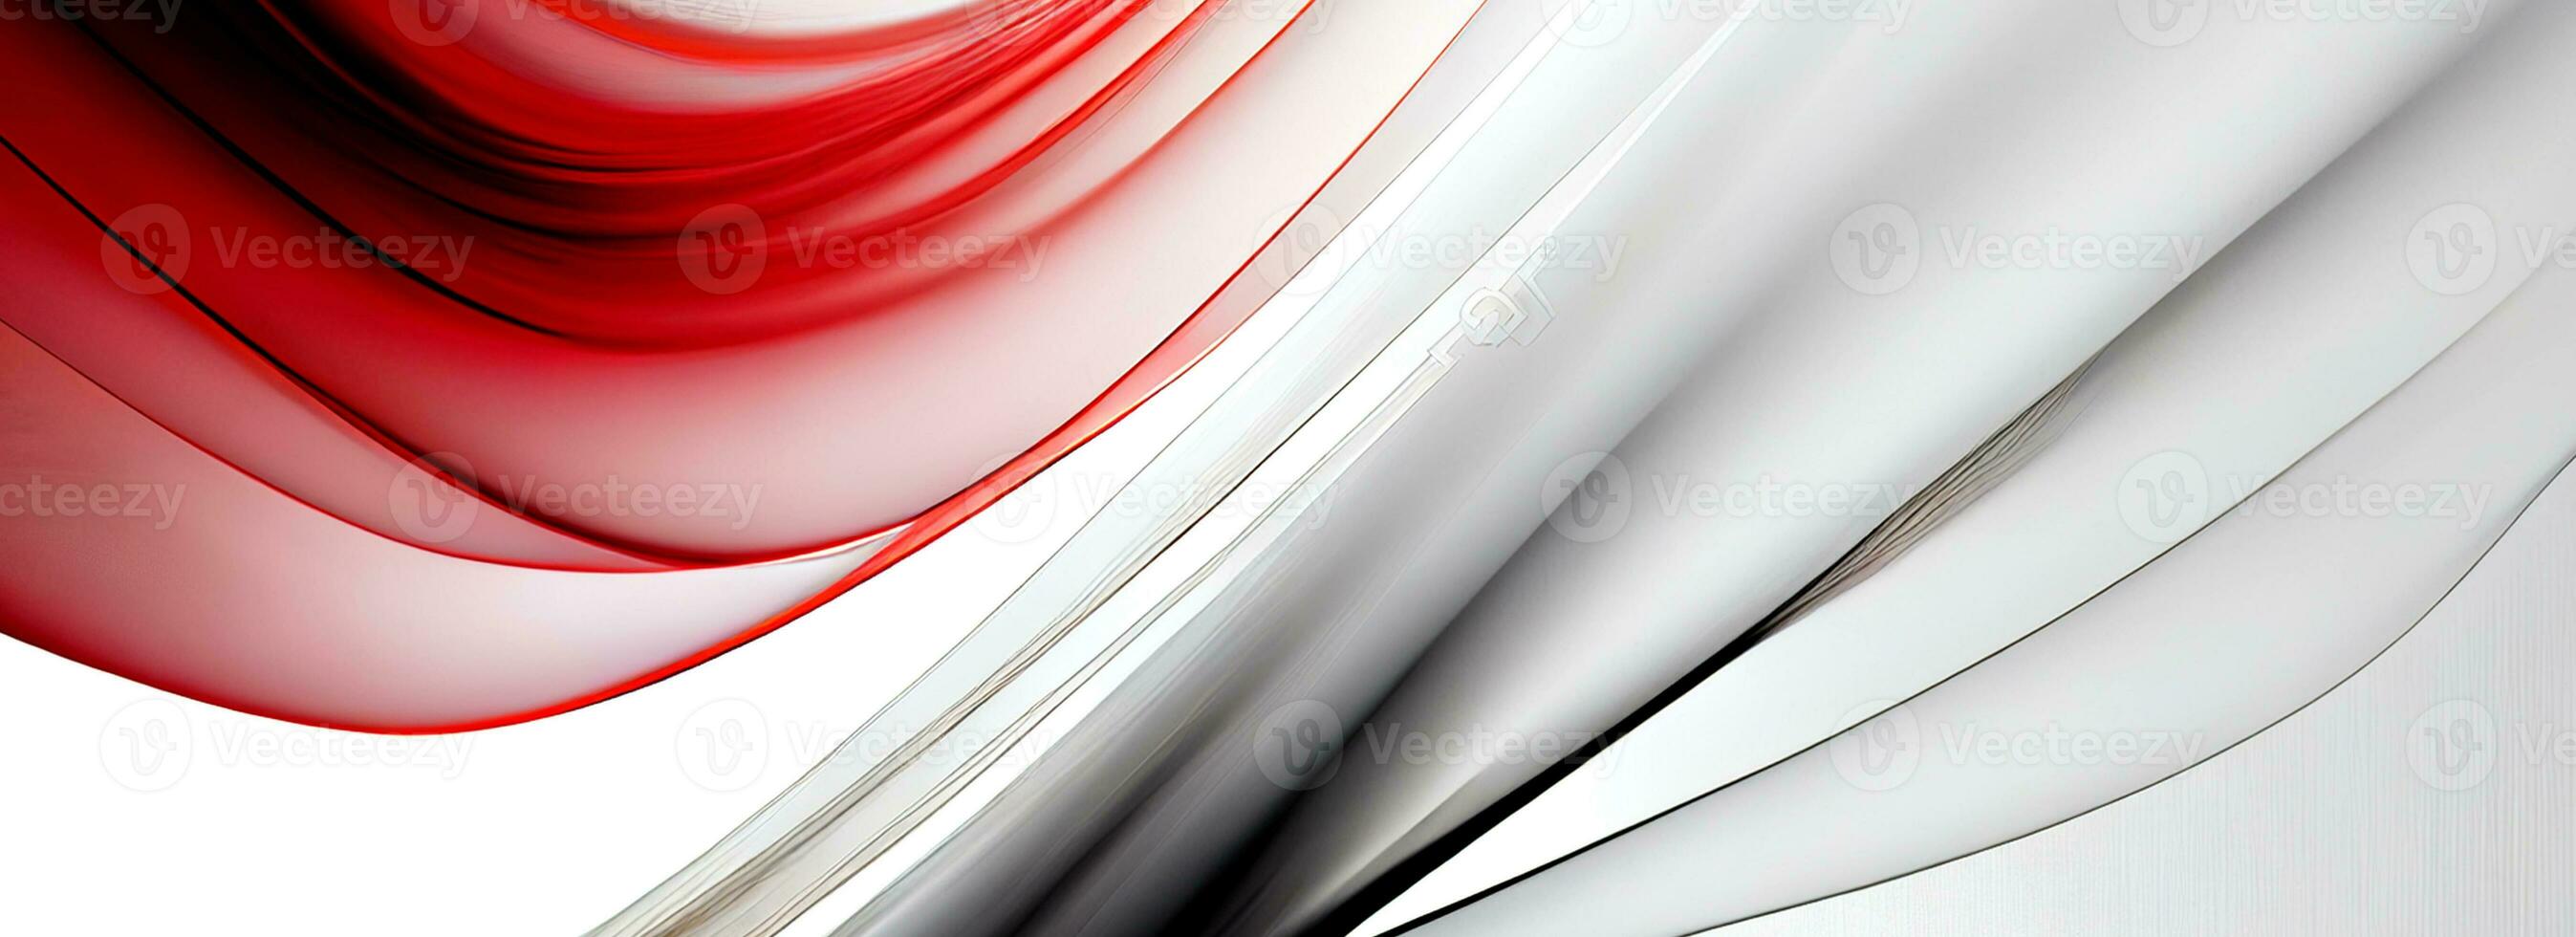 abstract rood en grijs glad golven beweging achtergrond. foto